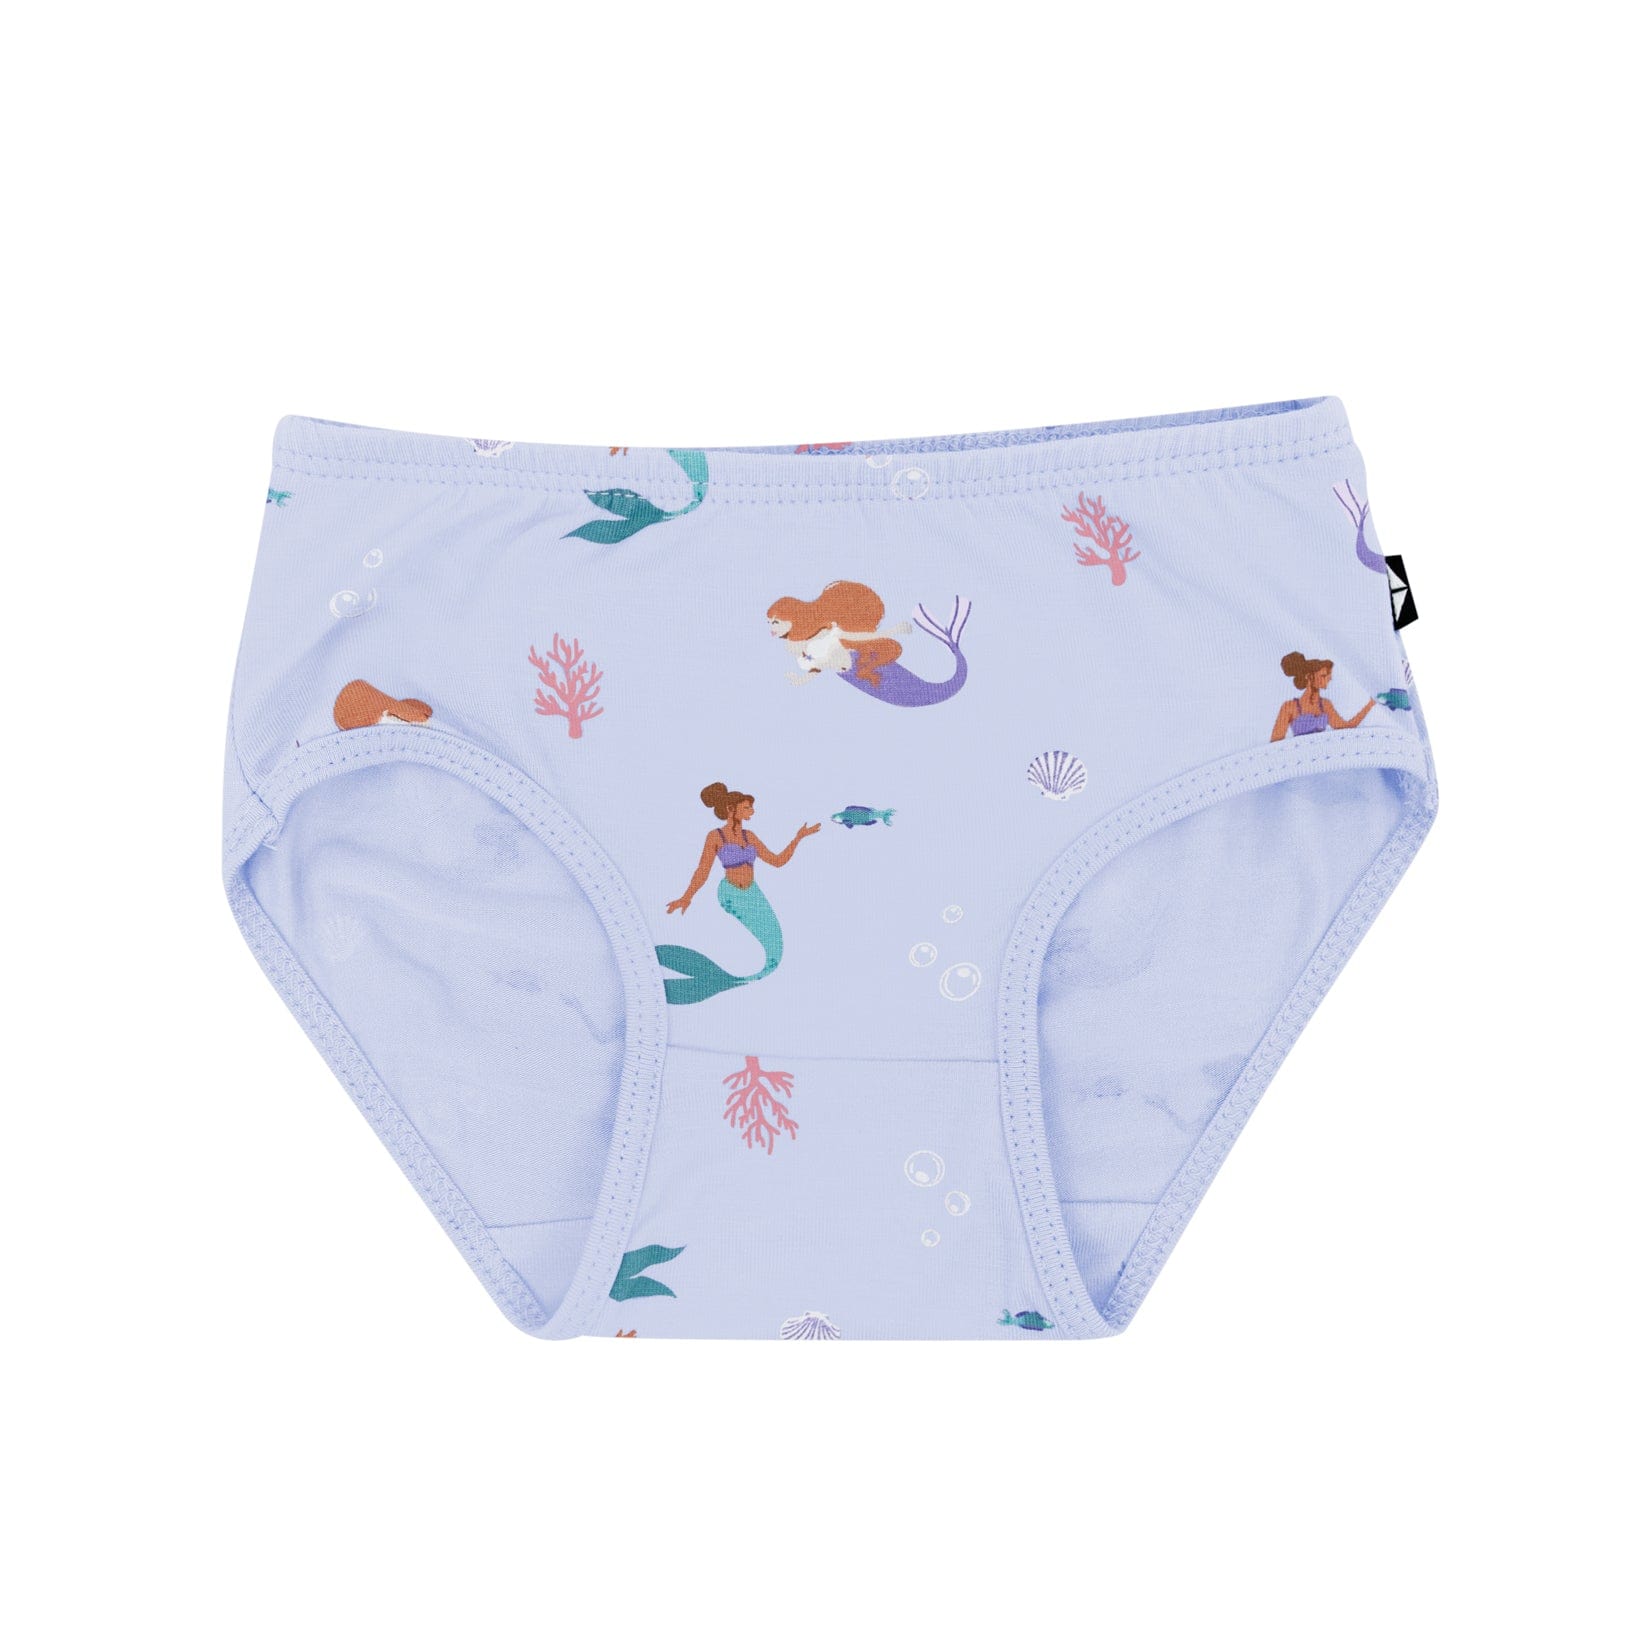 Kyte Baby Underwear Undies in Mermaid